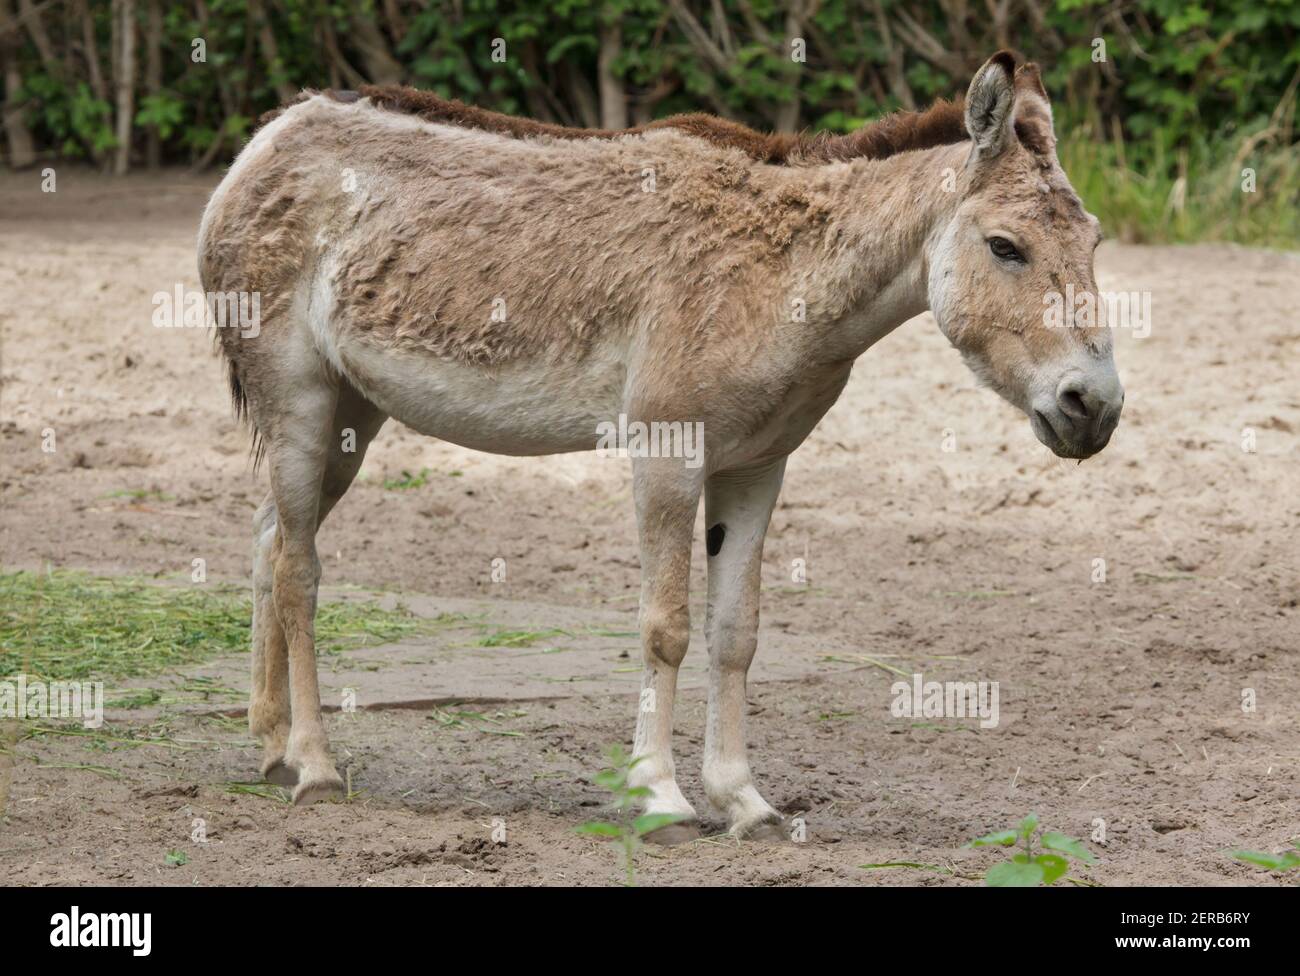 turcomano kulan (Equus hemionus kulan), también conocido como el salvaje de Transcaspian. Foto de stock